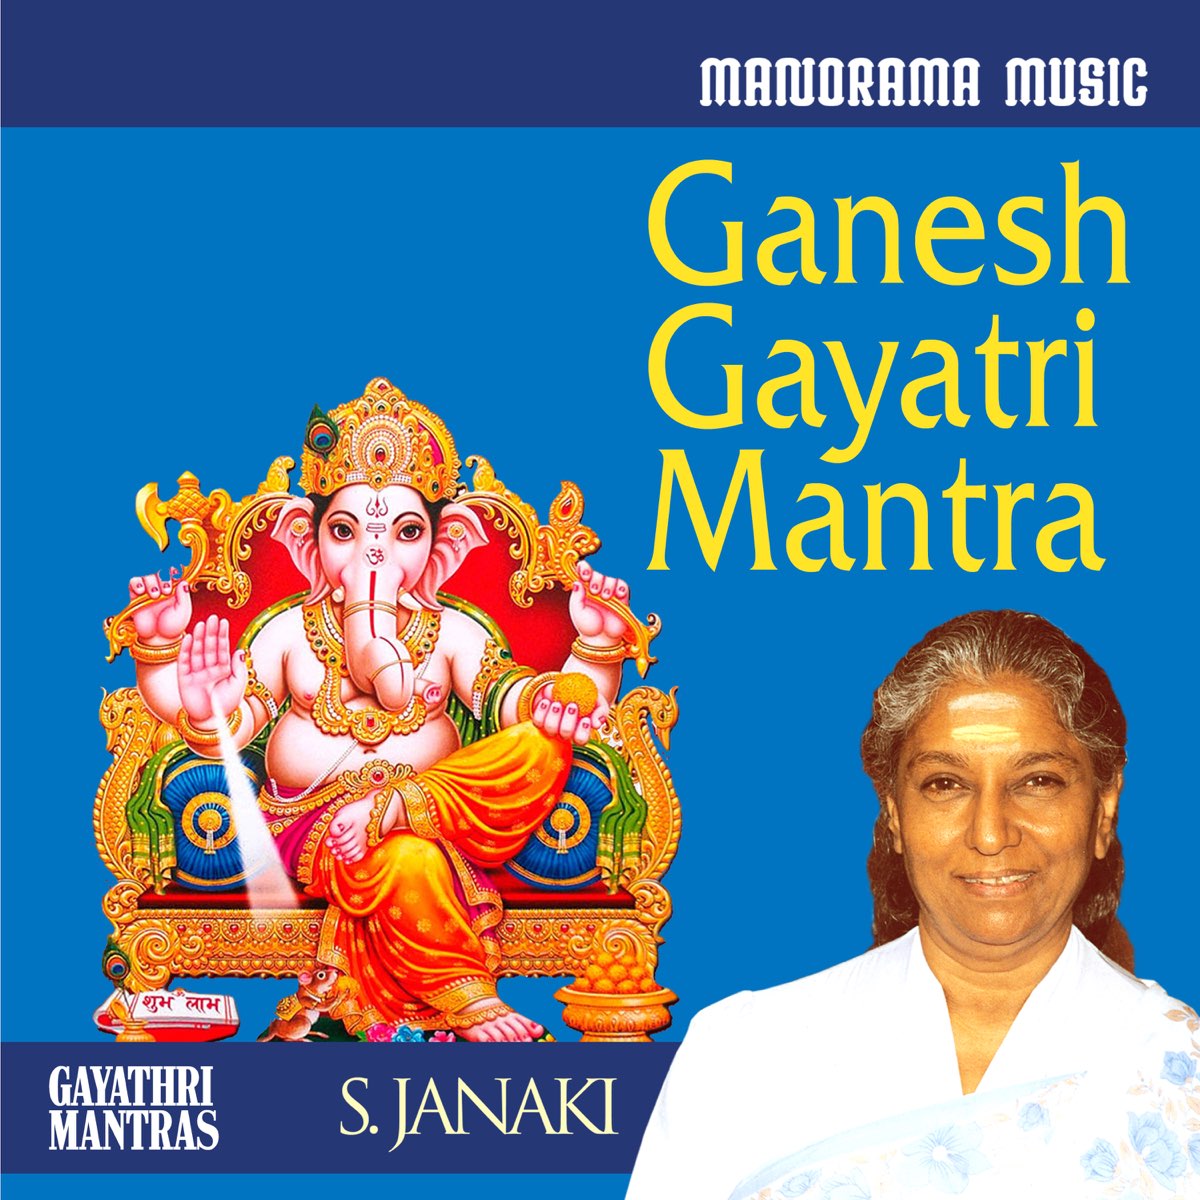 ‎Ganesha Gayathri Mantra - EP by S. Janaki on Apple Music